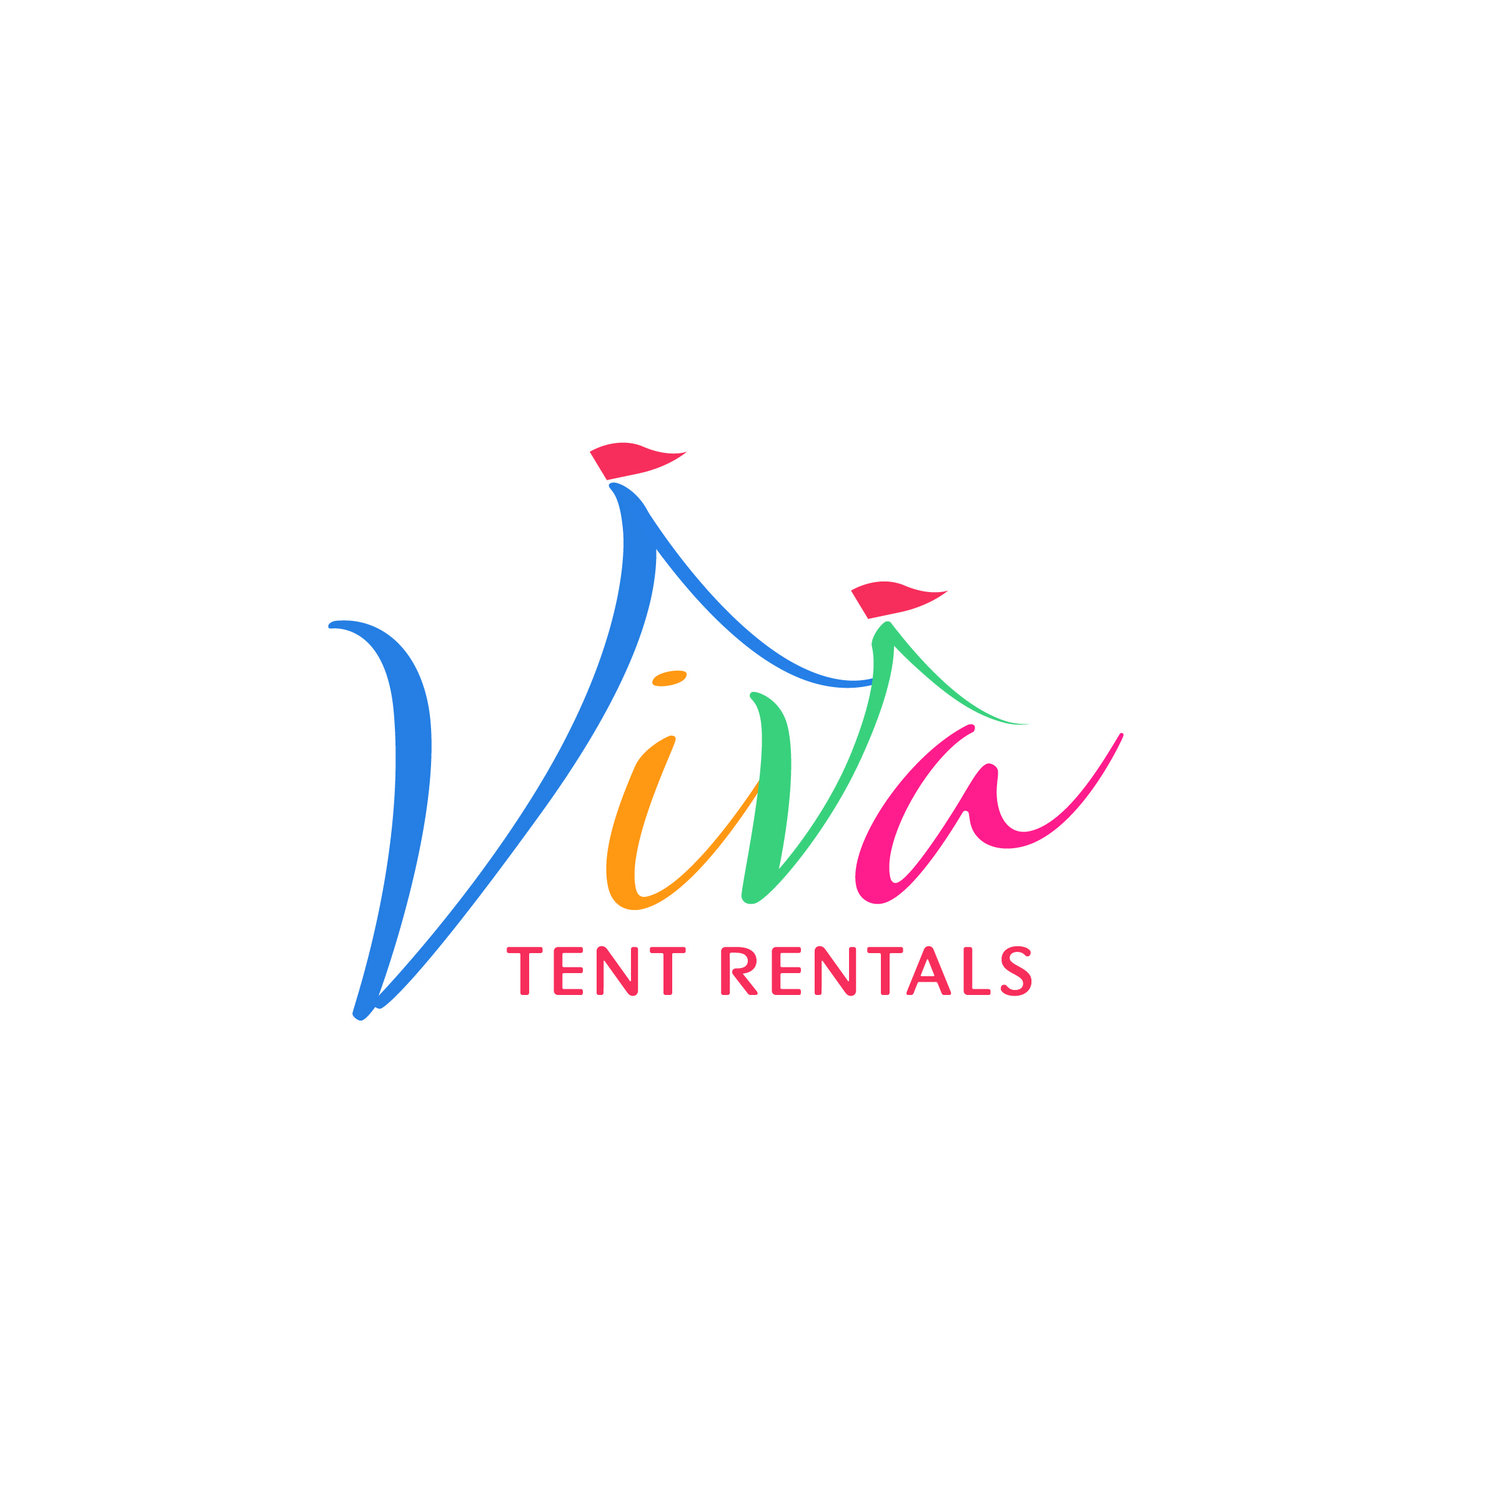 Viva Tent Rentals